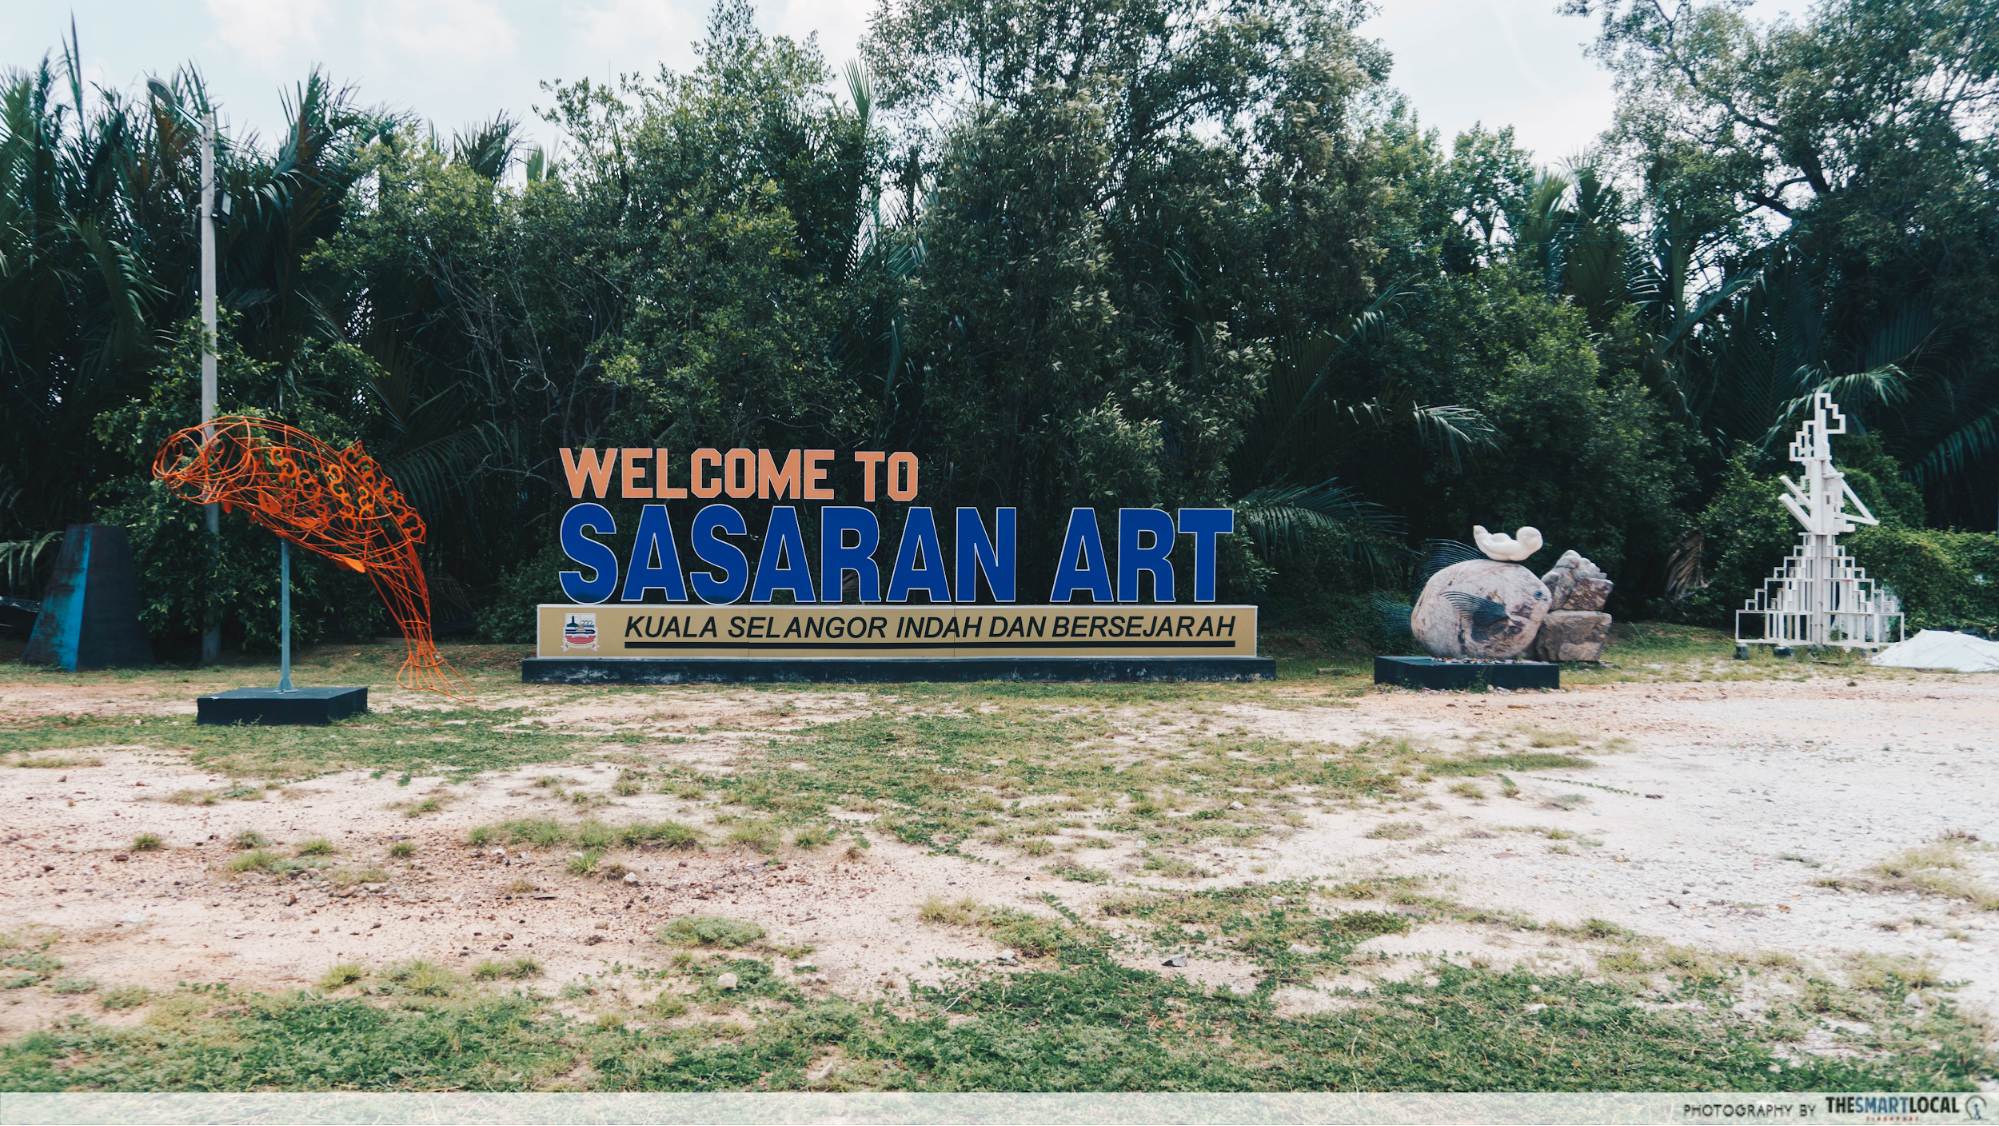 Jeram Kuala Selangor - Sasaran Art Park 